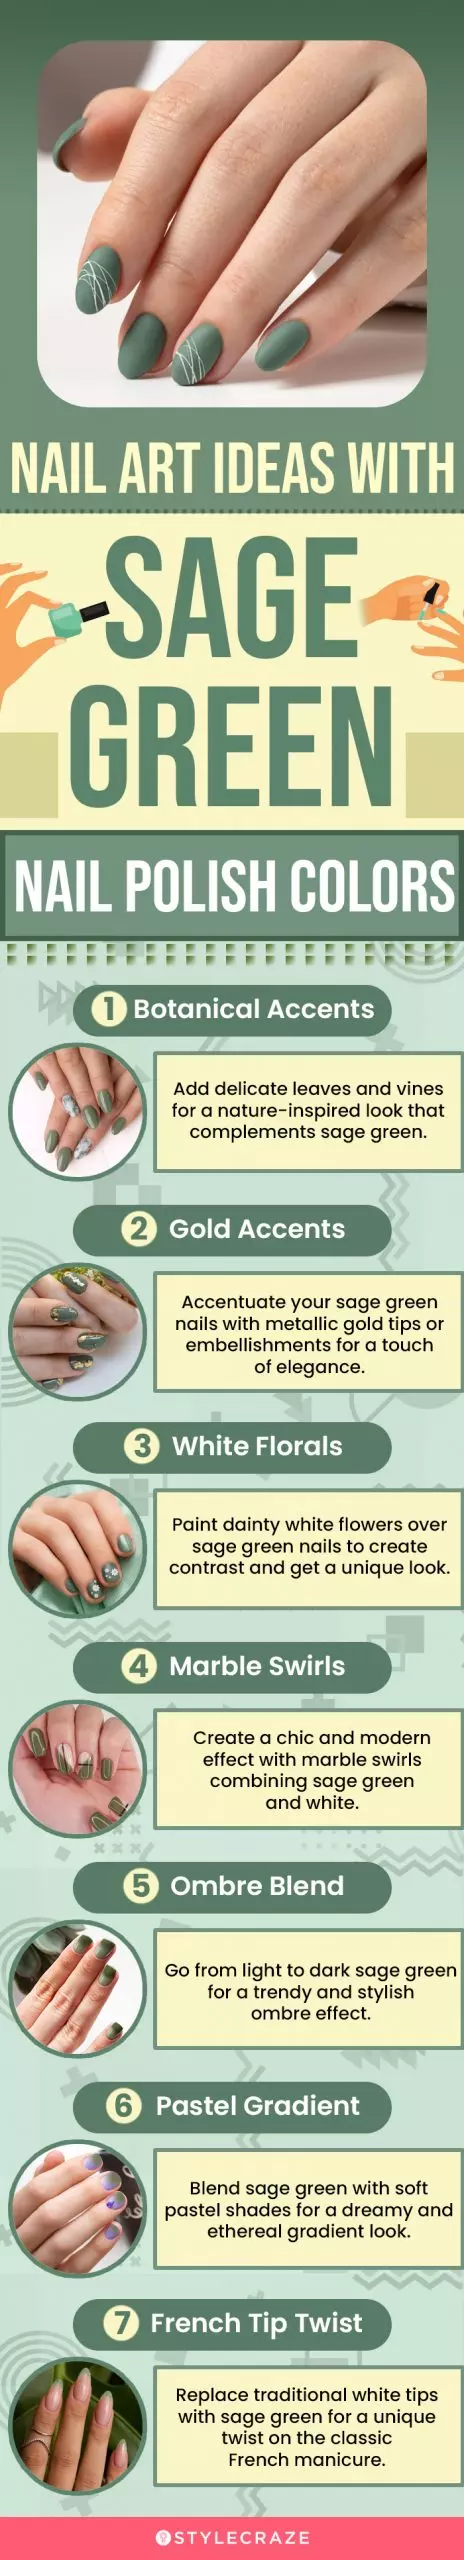 Nail Art Ideas With Sage Green Nail Polish Colors (infographic)